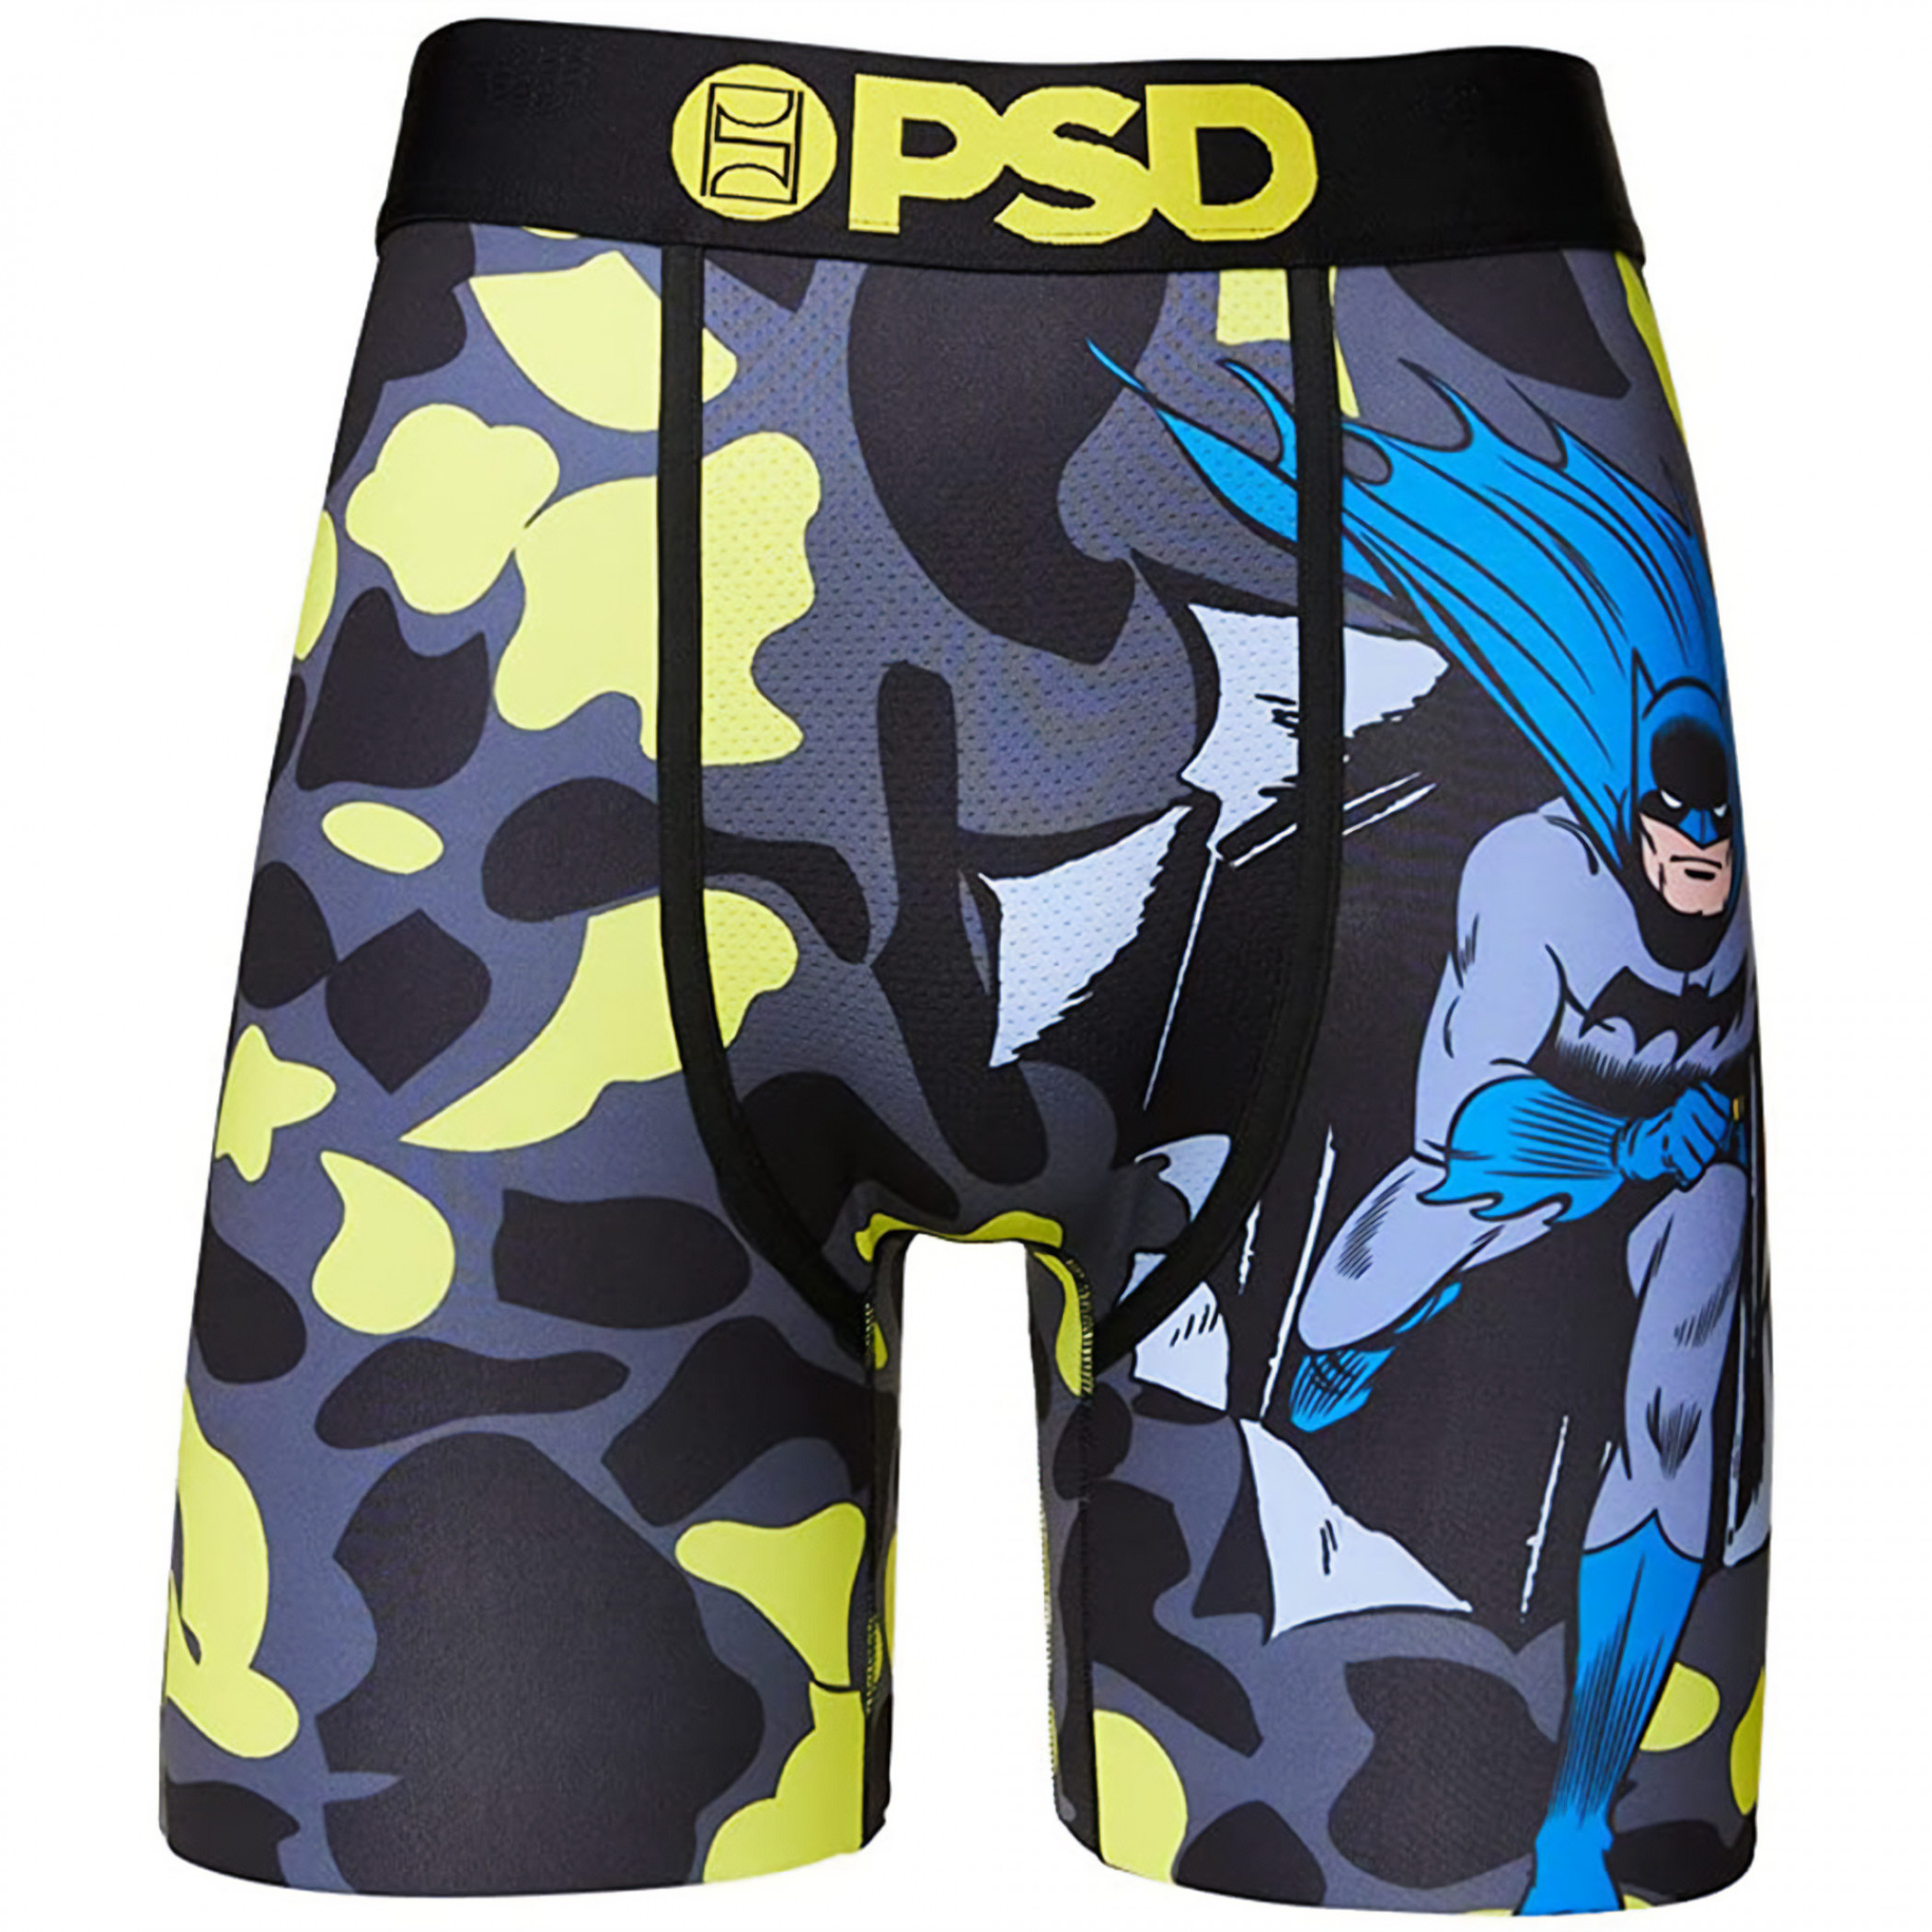 PSD Underwear - Ninja Pon Pon Boxer Brief by PSD